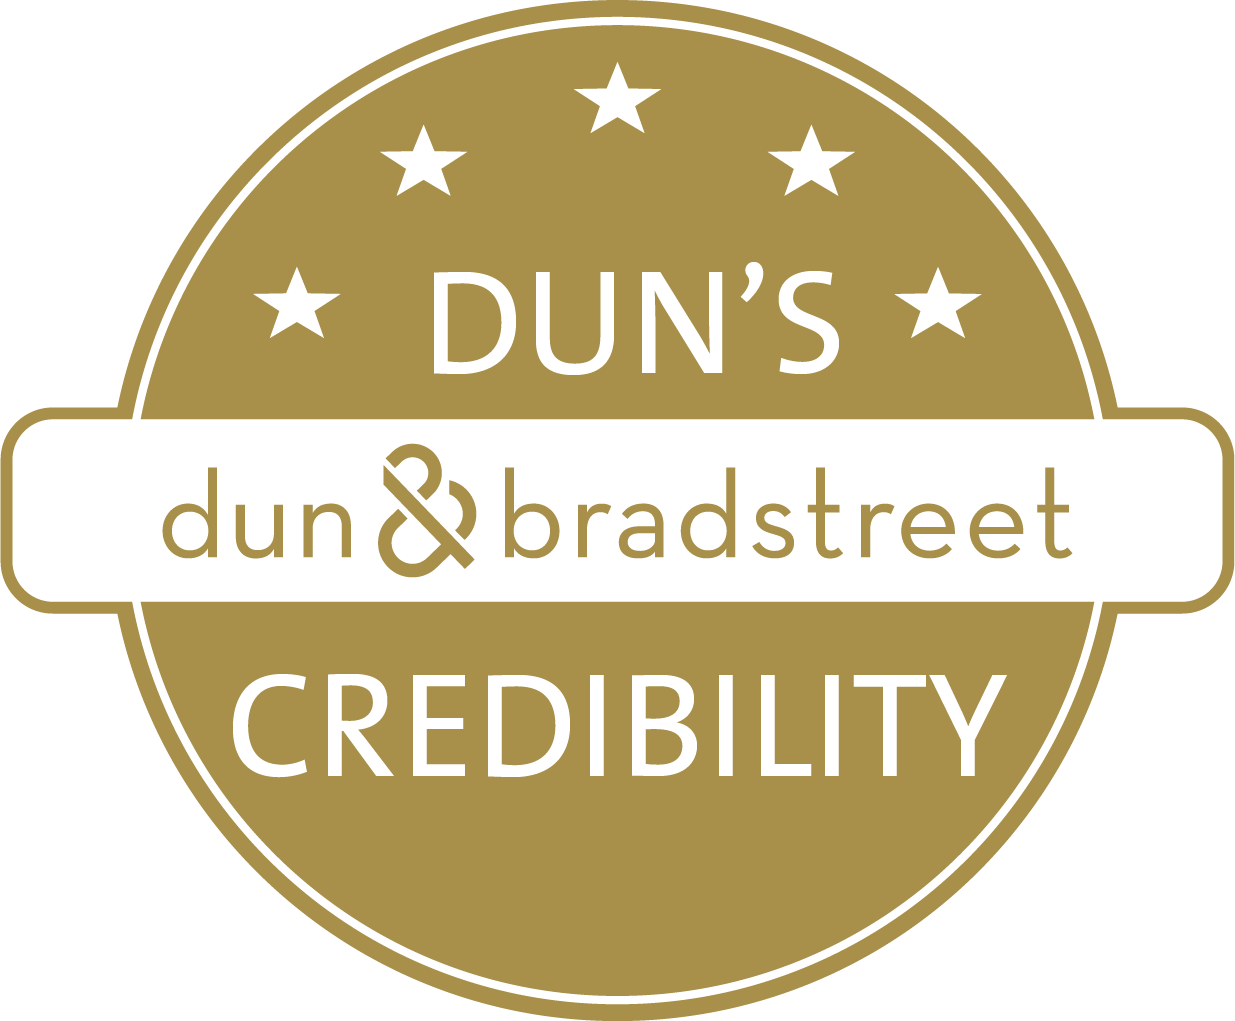 dun's credibility